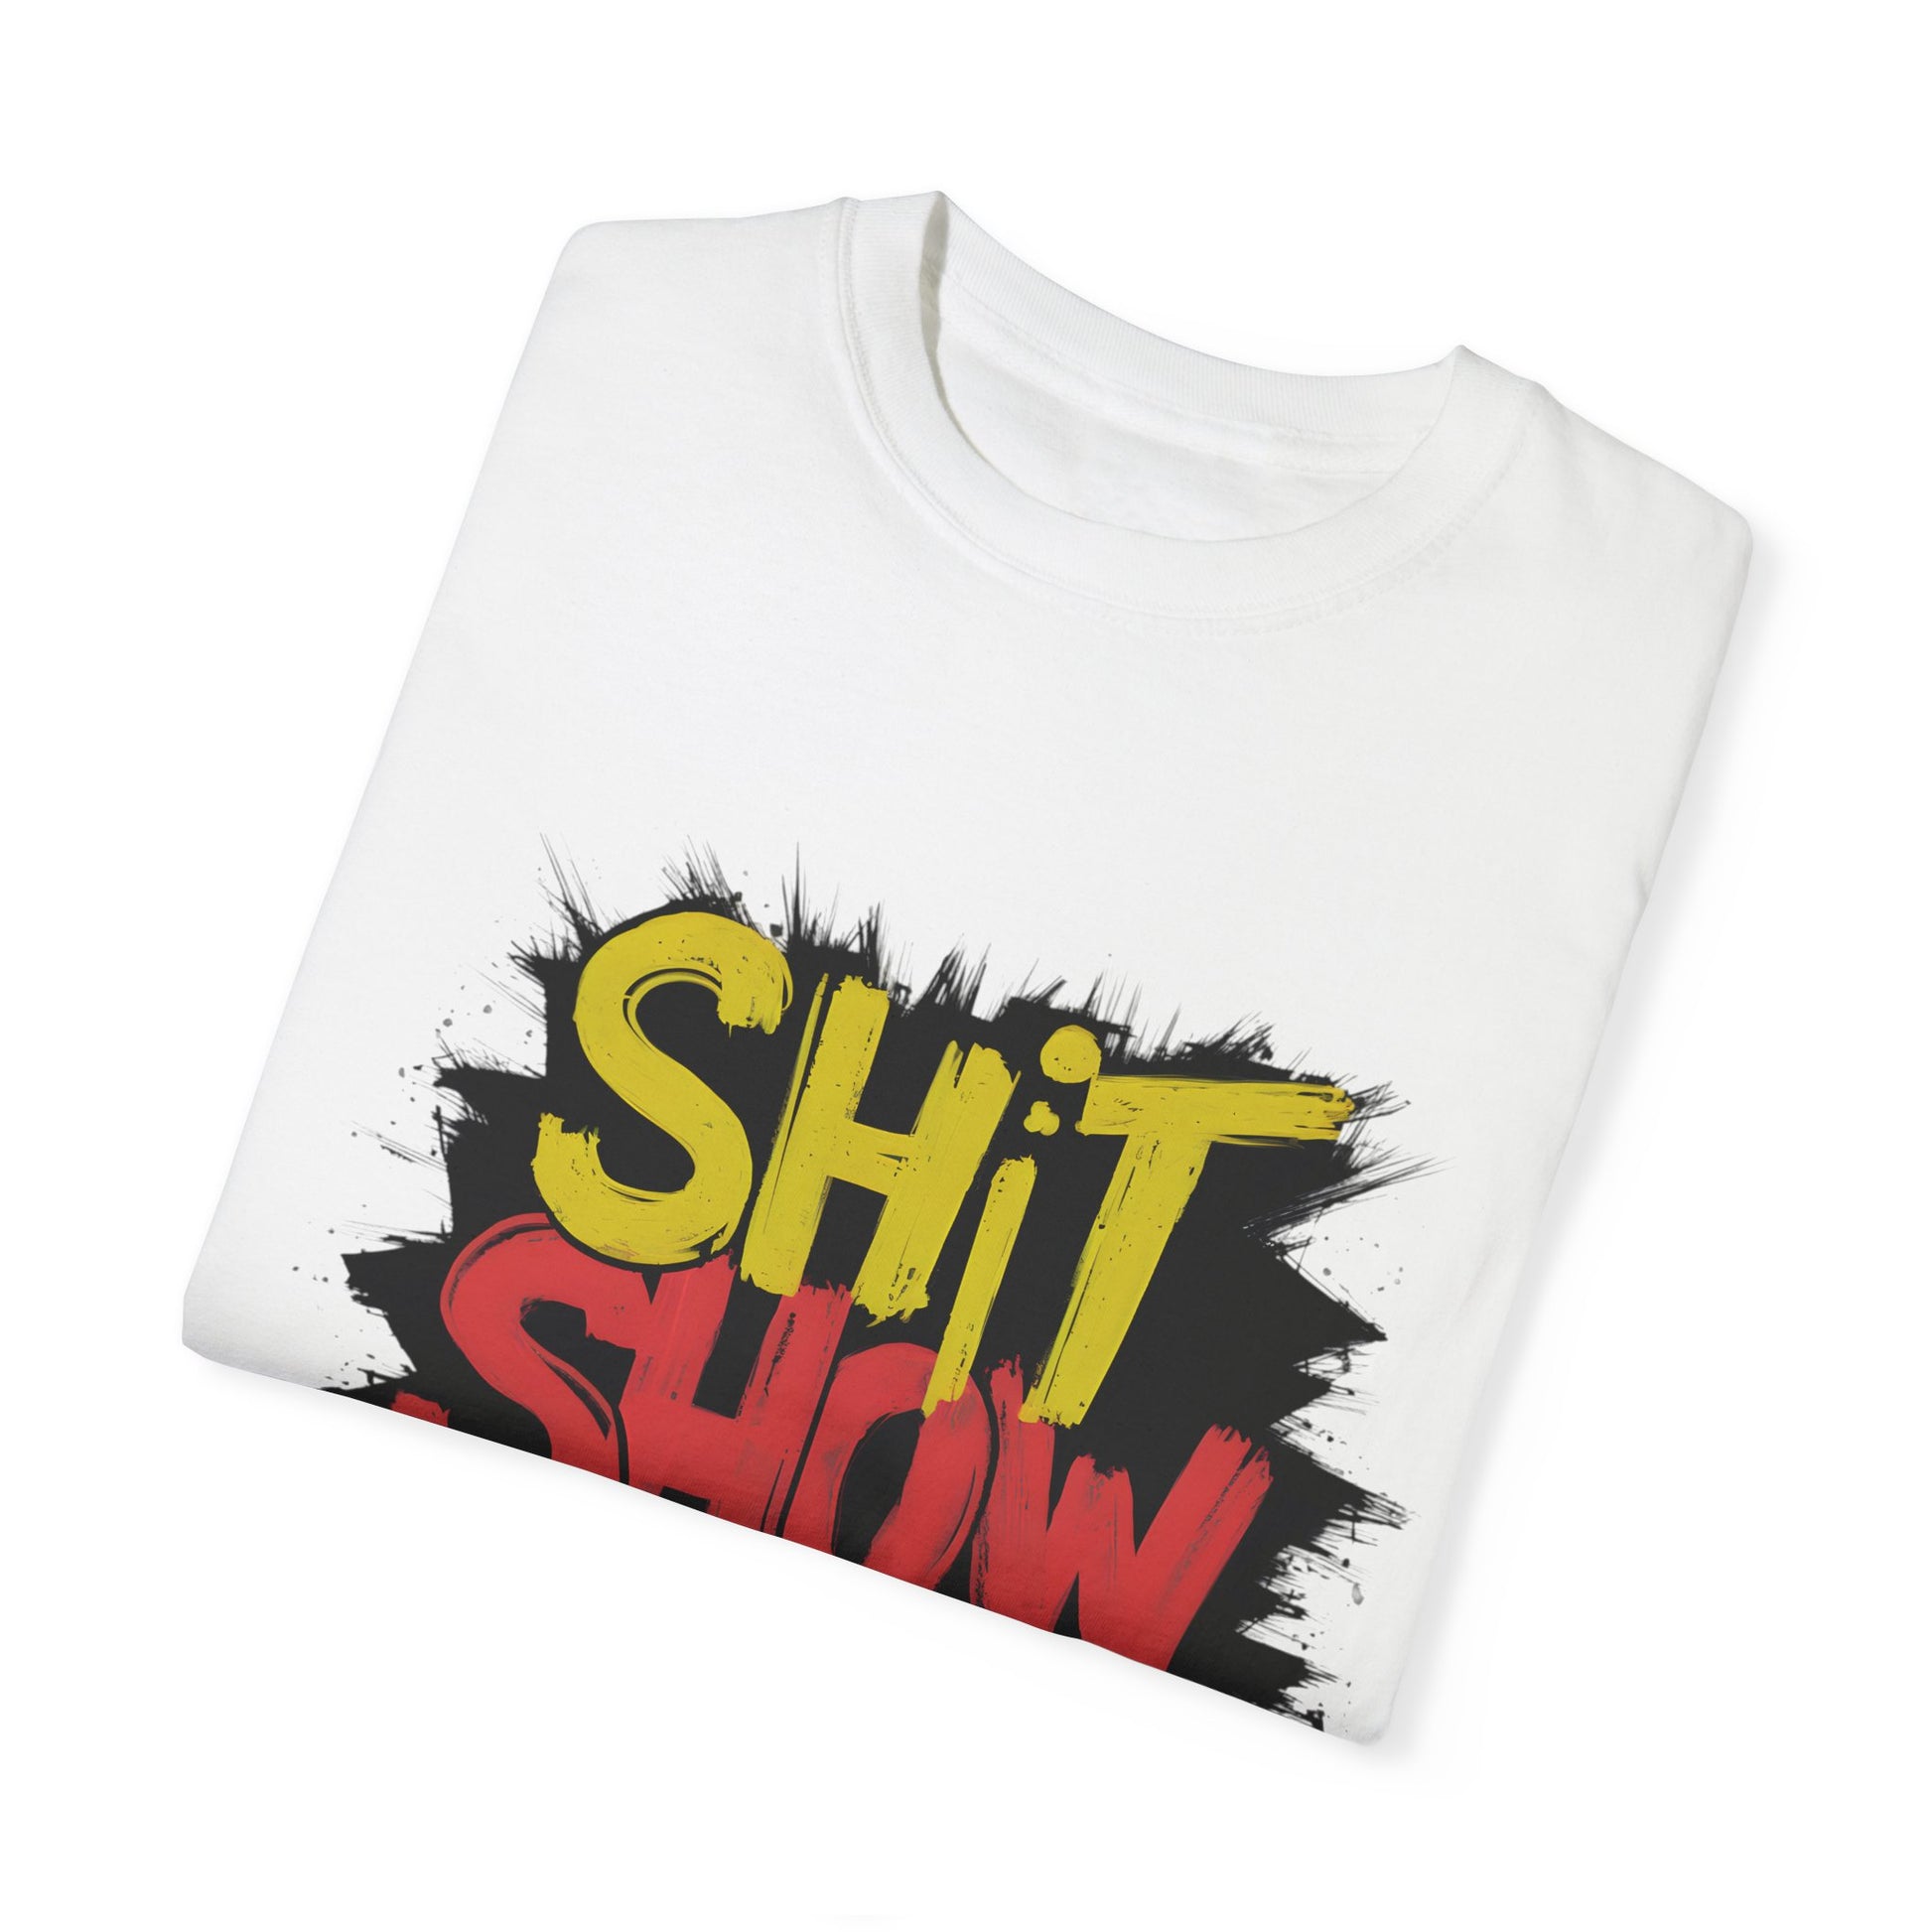 Shit Show Supervisor Urban Sarcastic Graphic Unisex Garment Dyed T-shirt Cotton Funny Humorous Graphic Soft Premium Unisex Men Women White T-shirt Birthday Gift-23